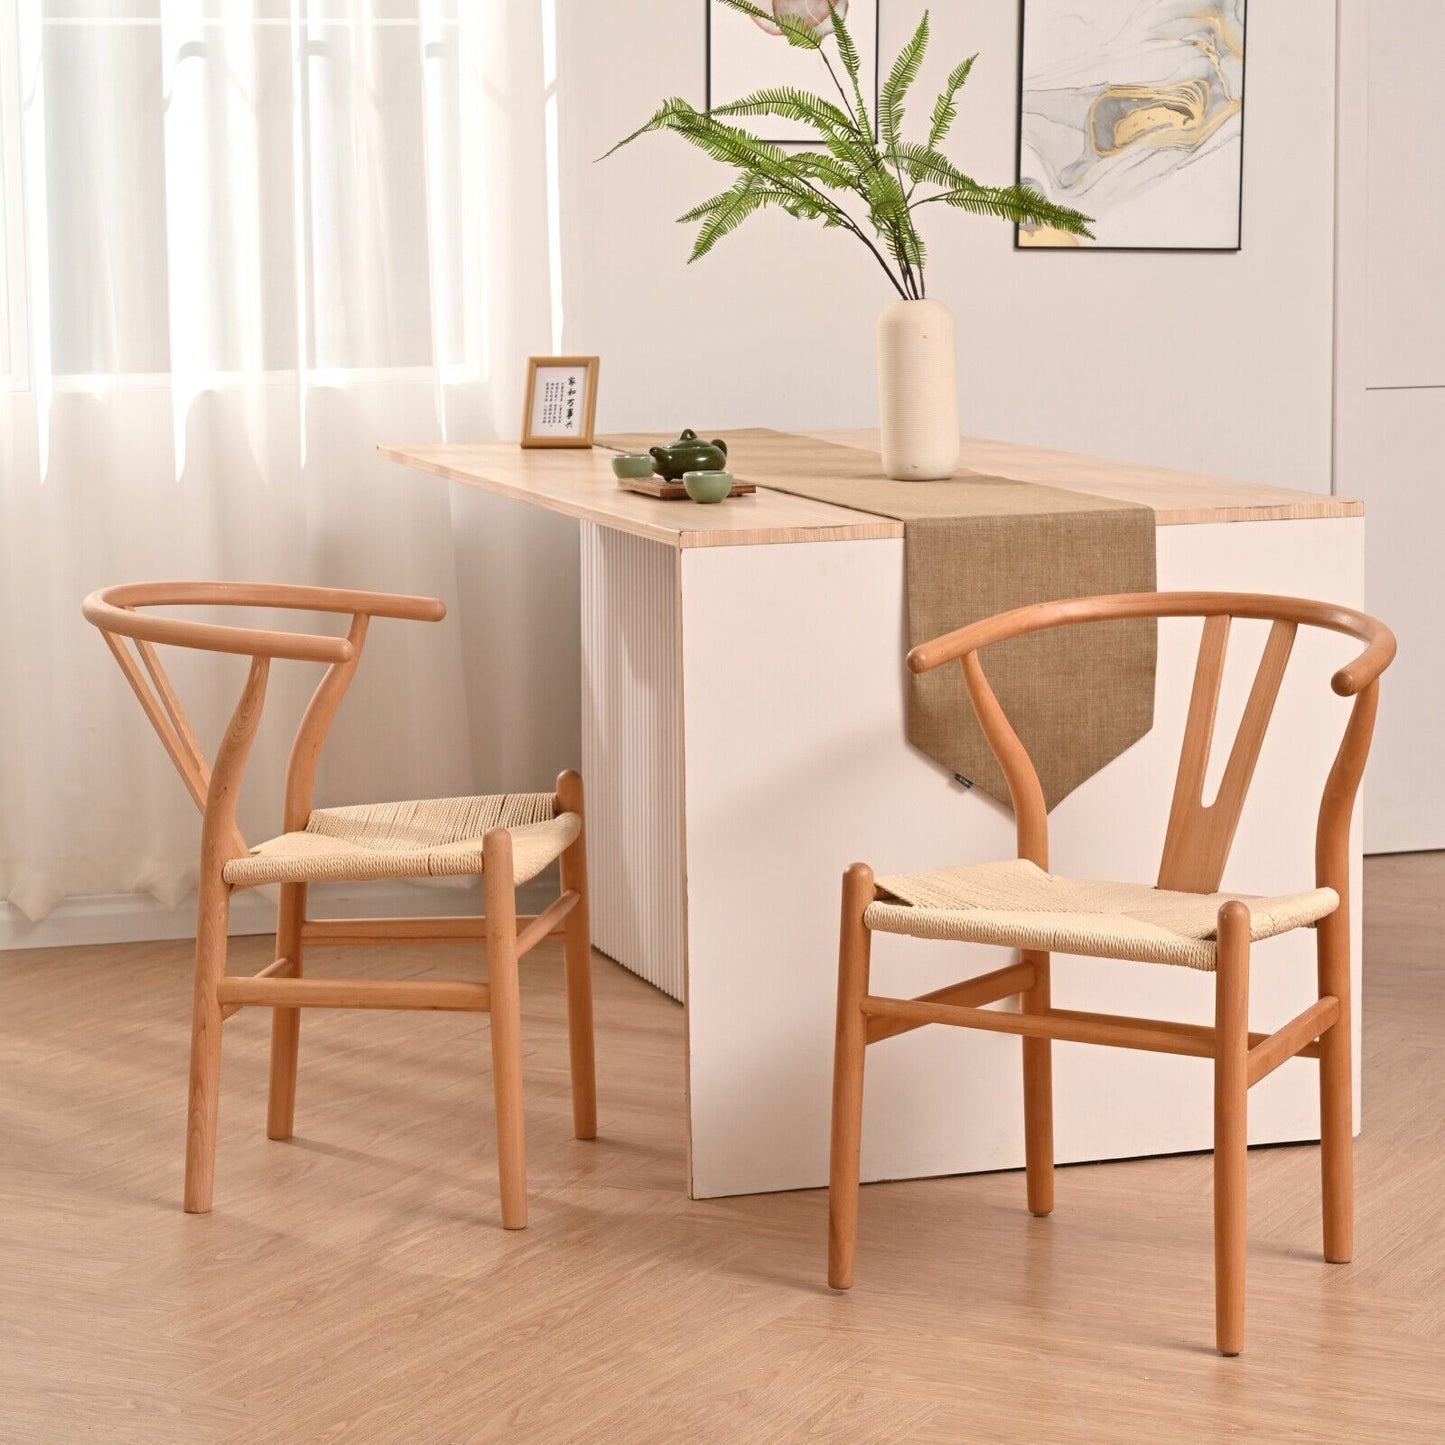 Natural Solid Wood Wishbone Design Backrest Chair